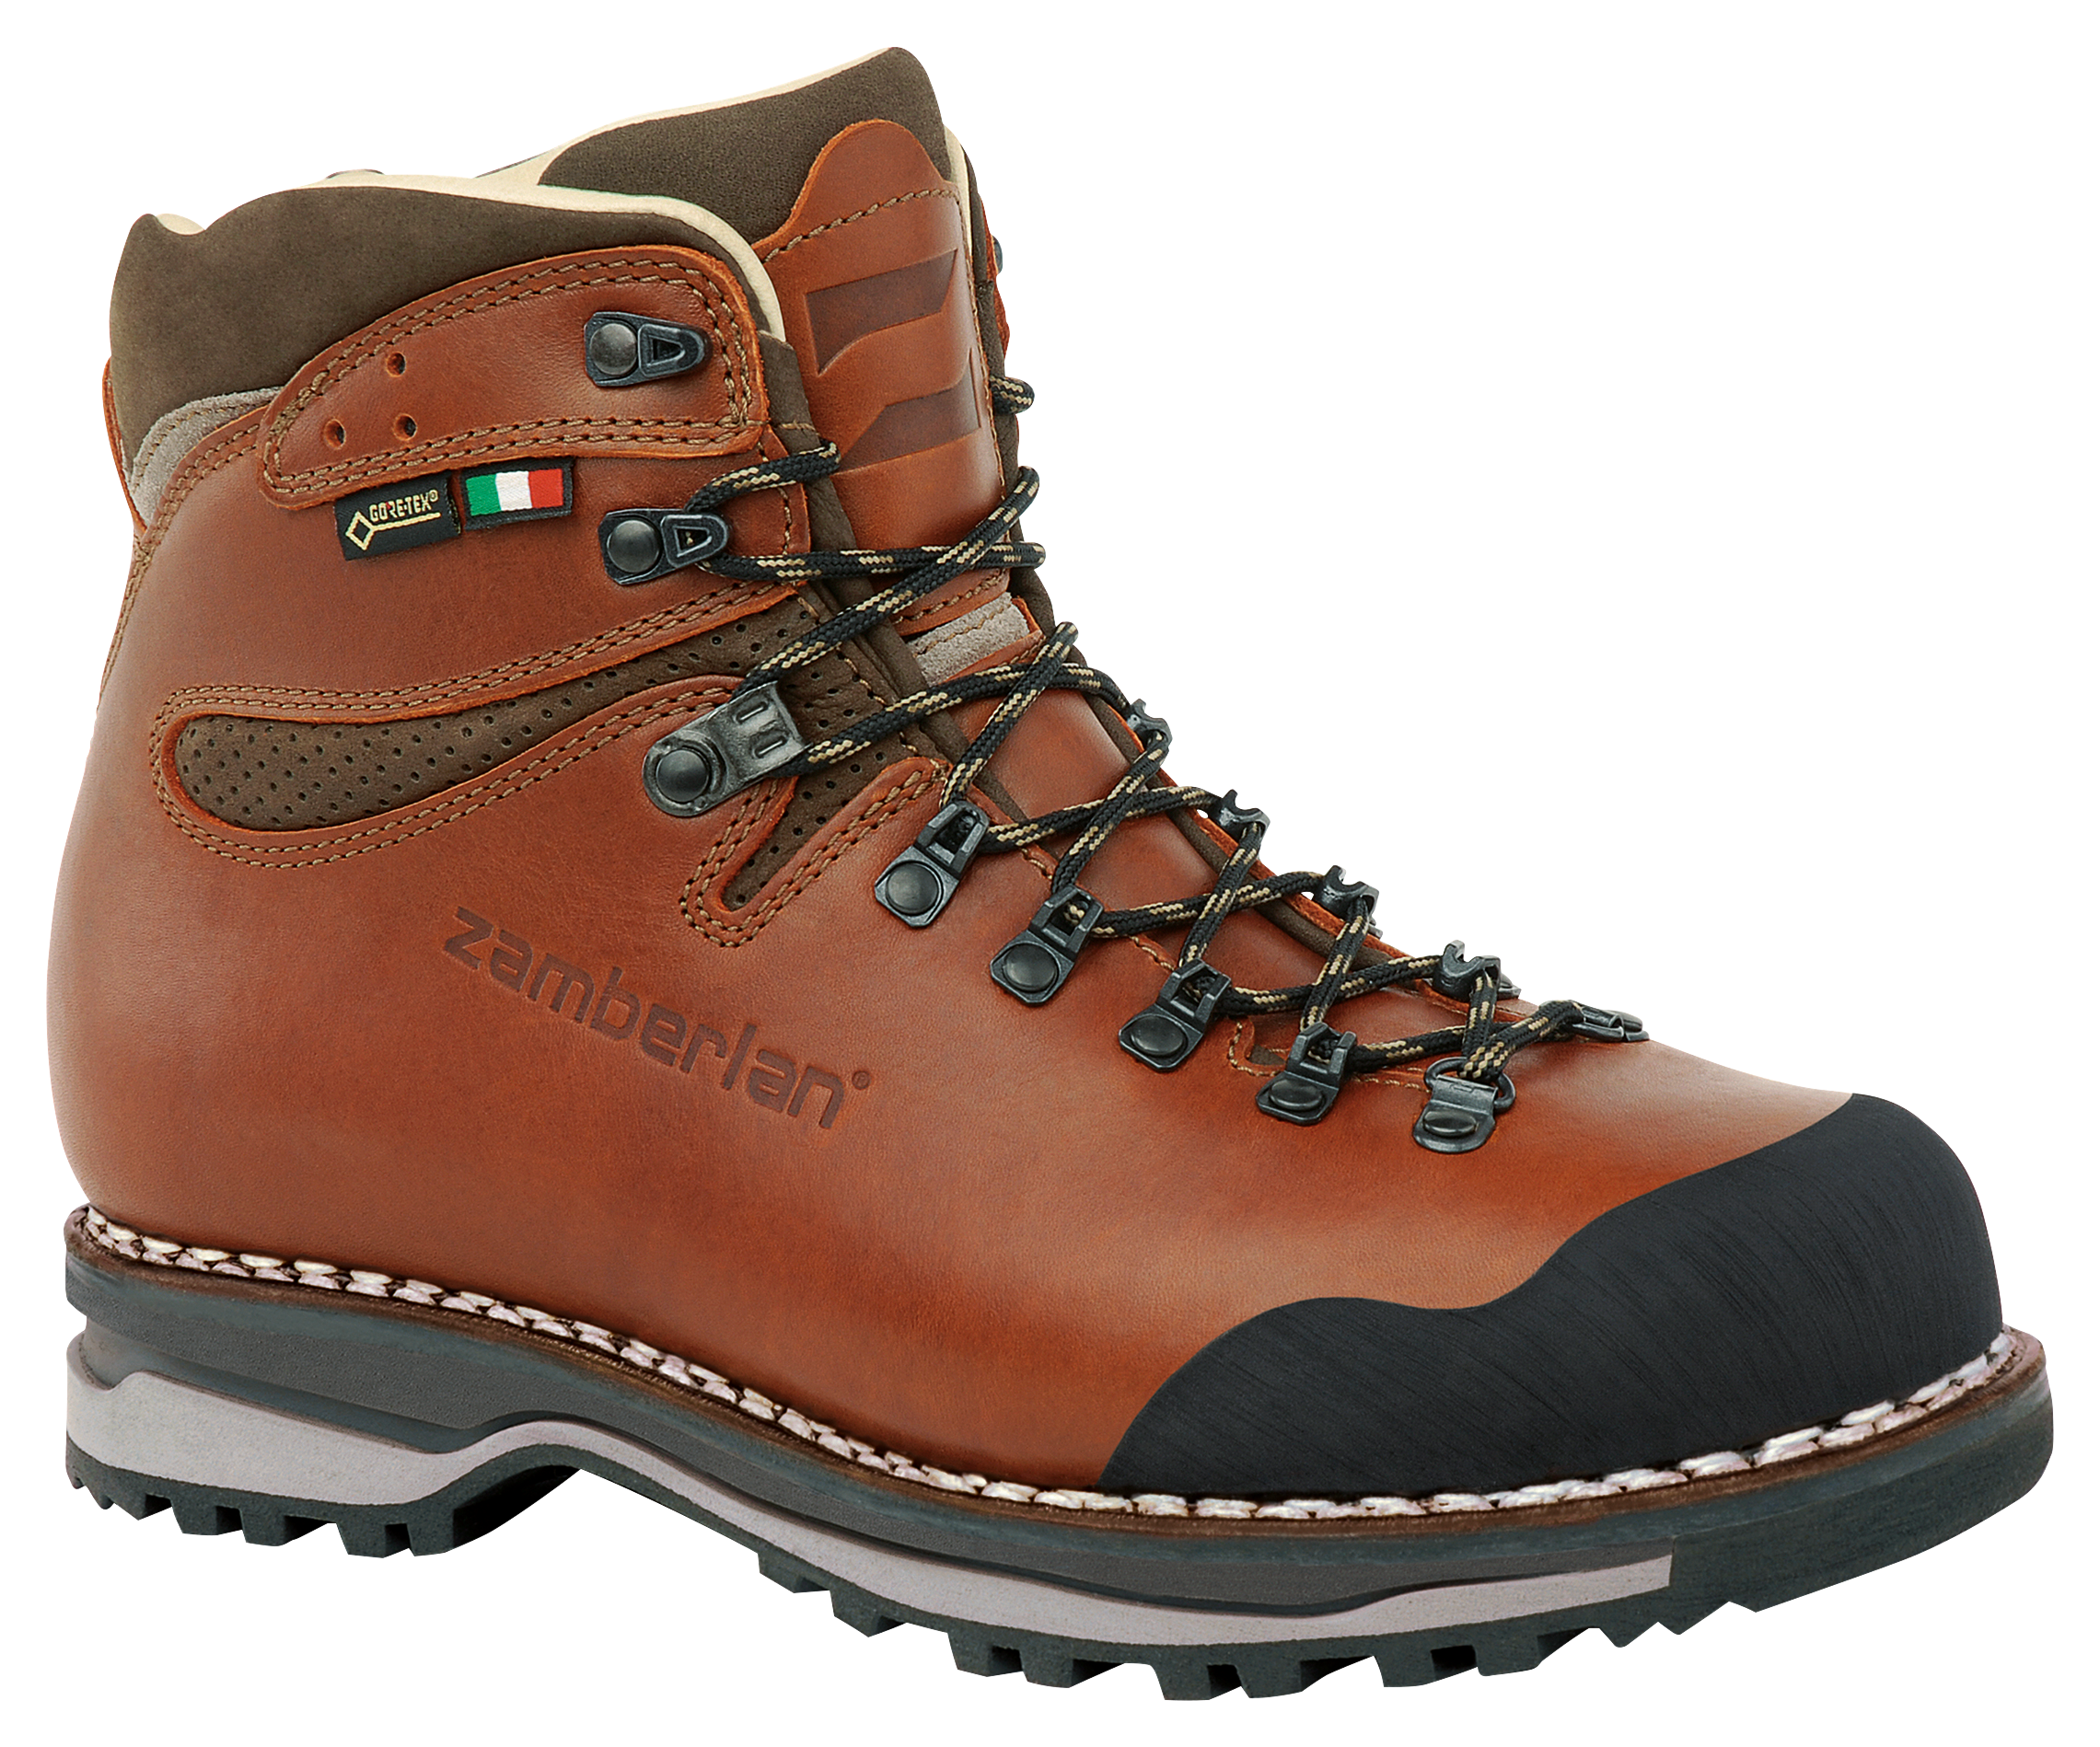 Zamberlan 1025 Tofane NW GTX RR Waterproof Hiking Boots for Men - Waxed Brick - 10M